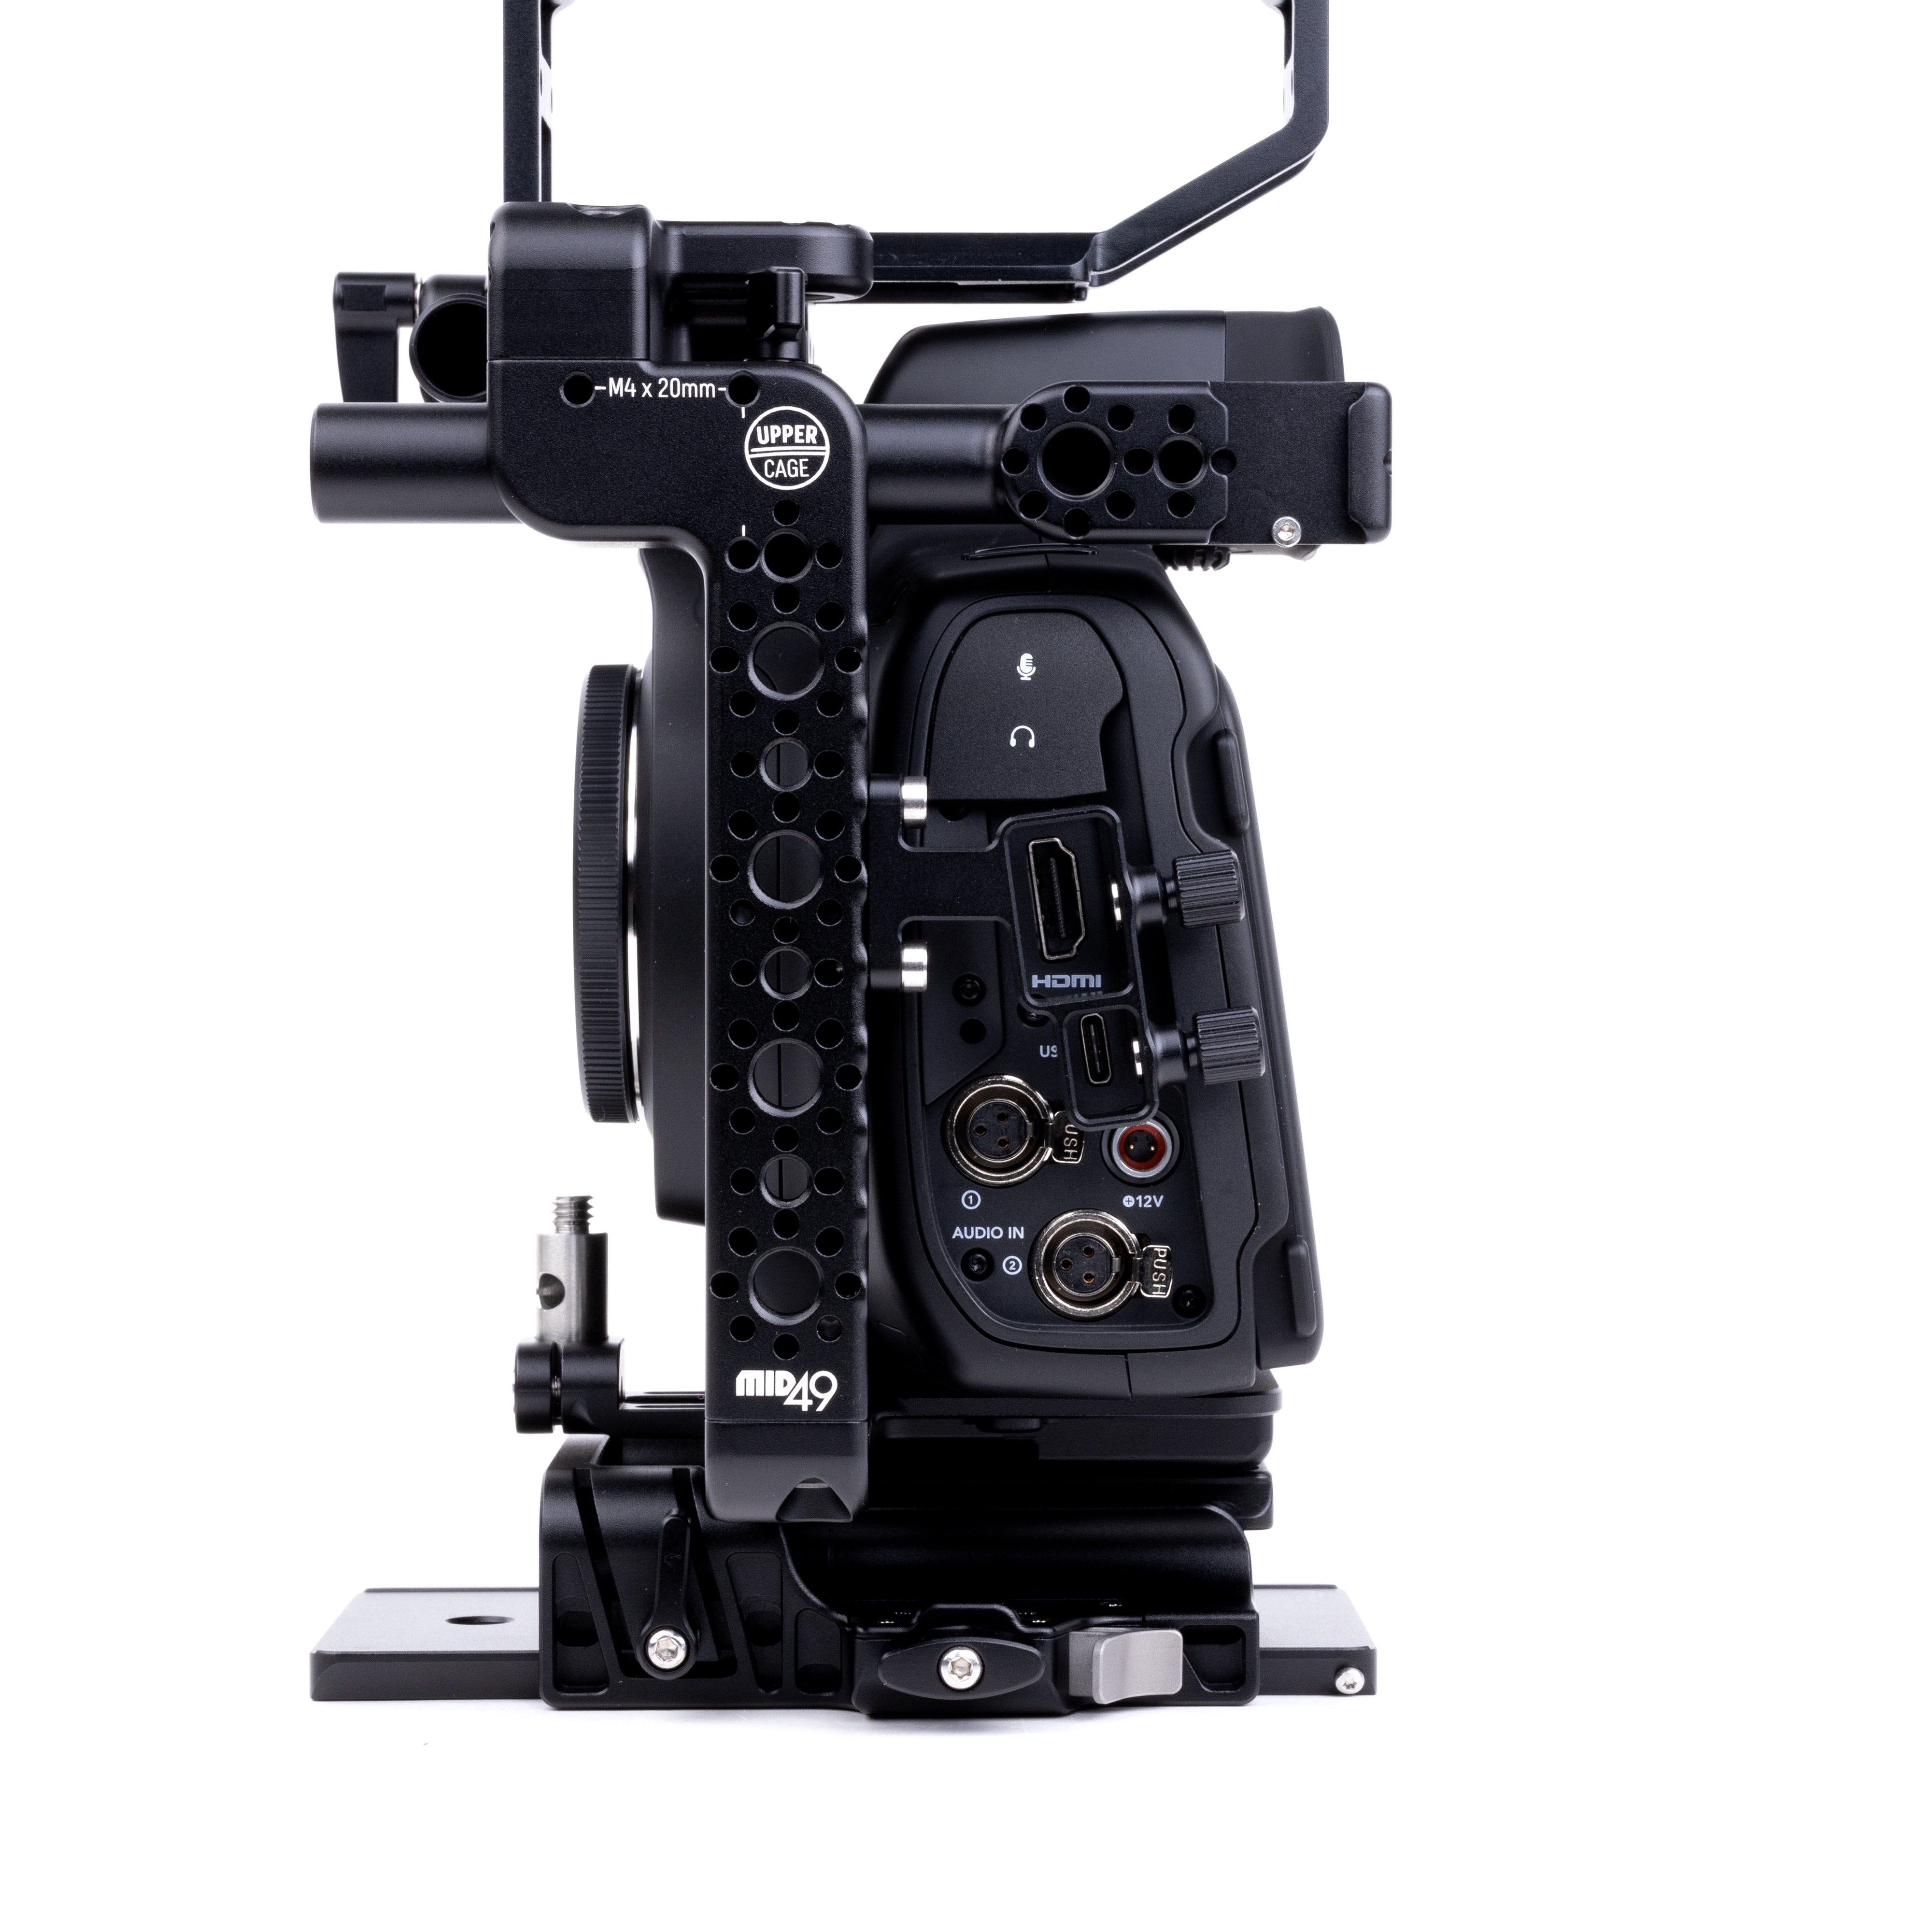 Base Kit for Blackmagic Cinema Camera 6K (Full Frame, Pocket Pro, Pocket G2)